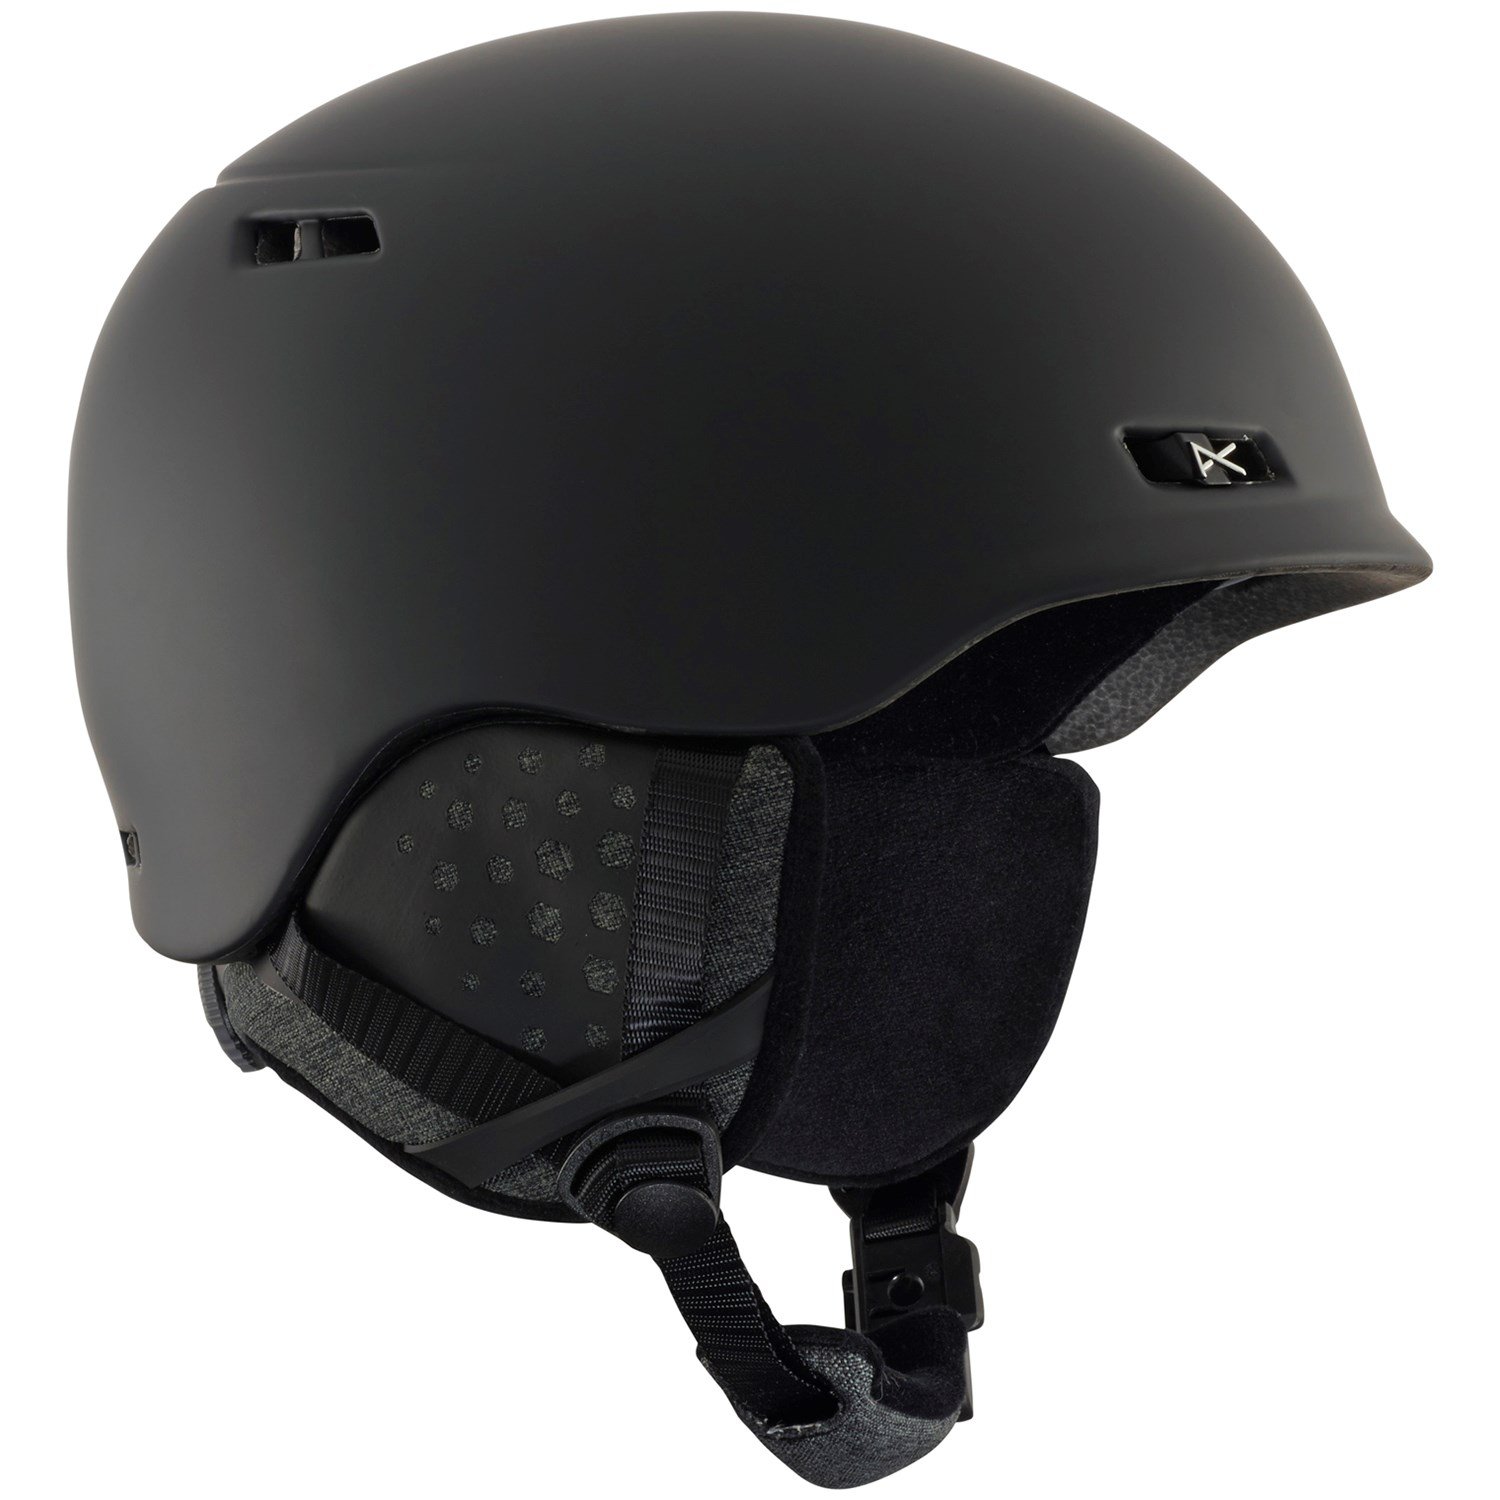 шлем защитный anon rodan mips xl black Шлем Anon Rodan, черный